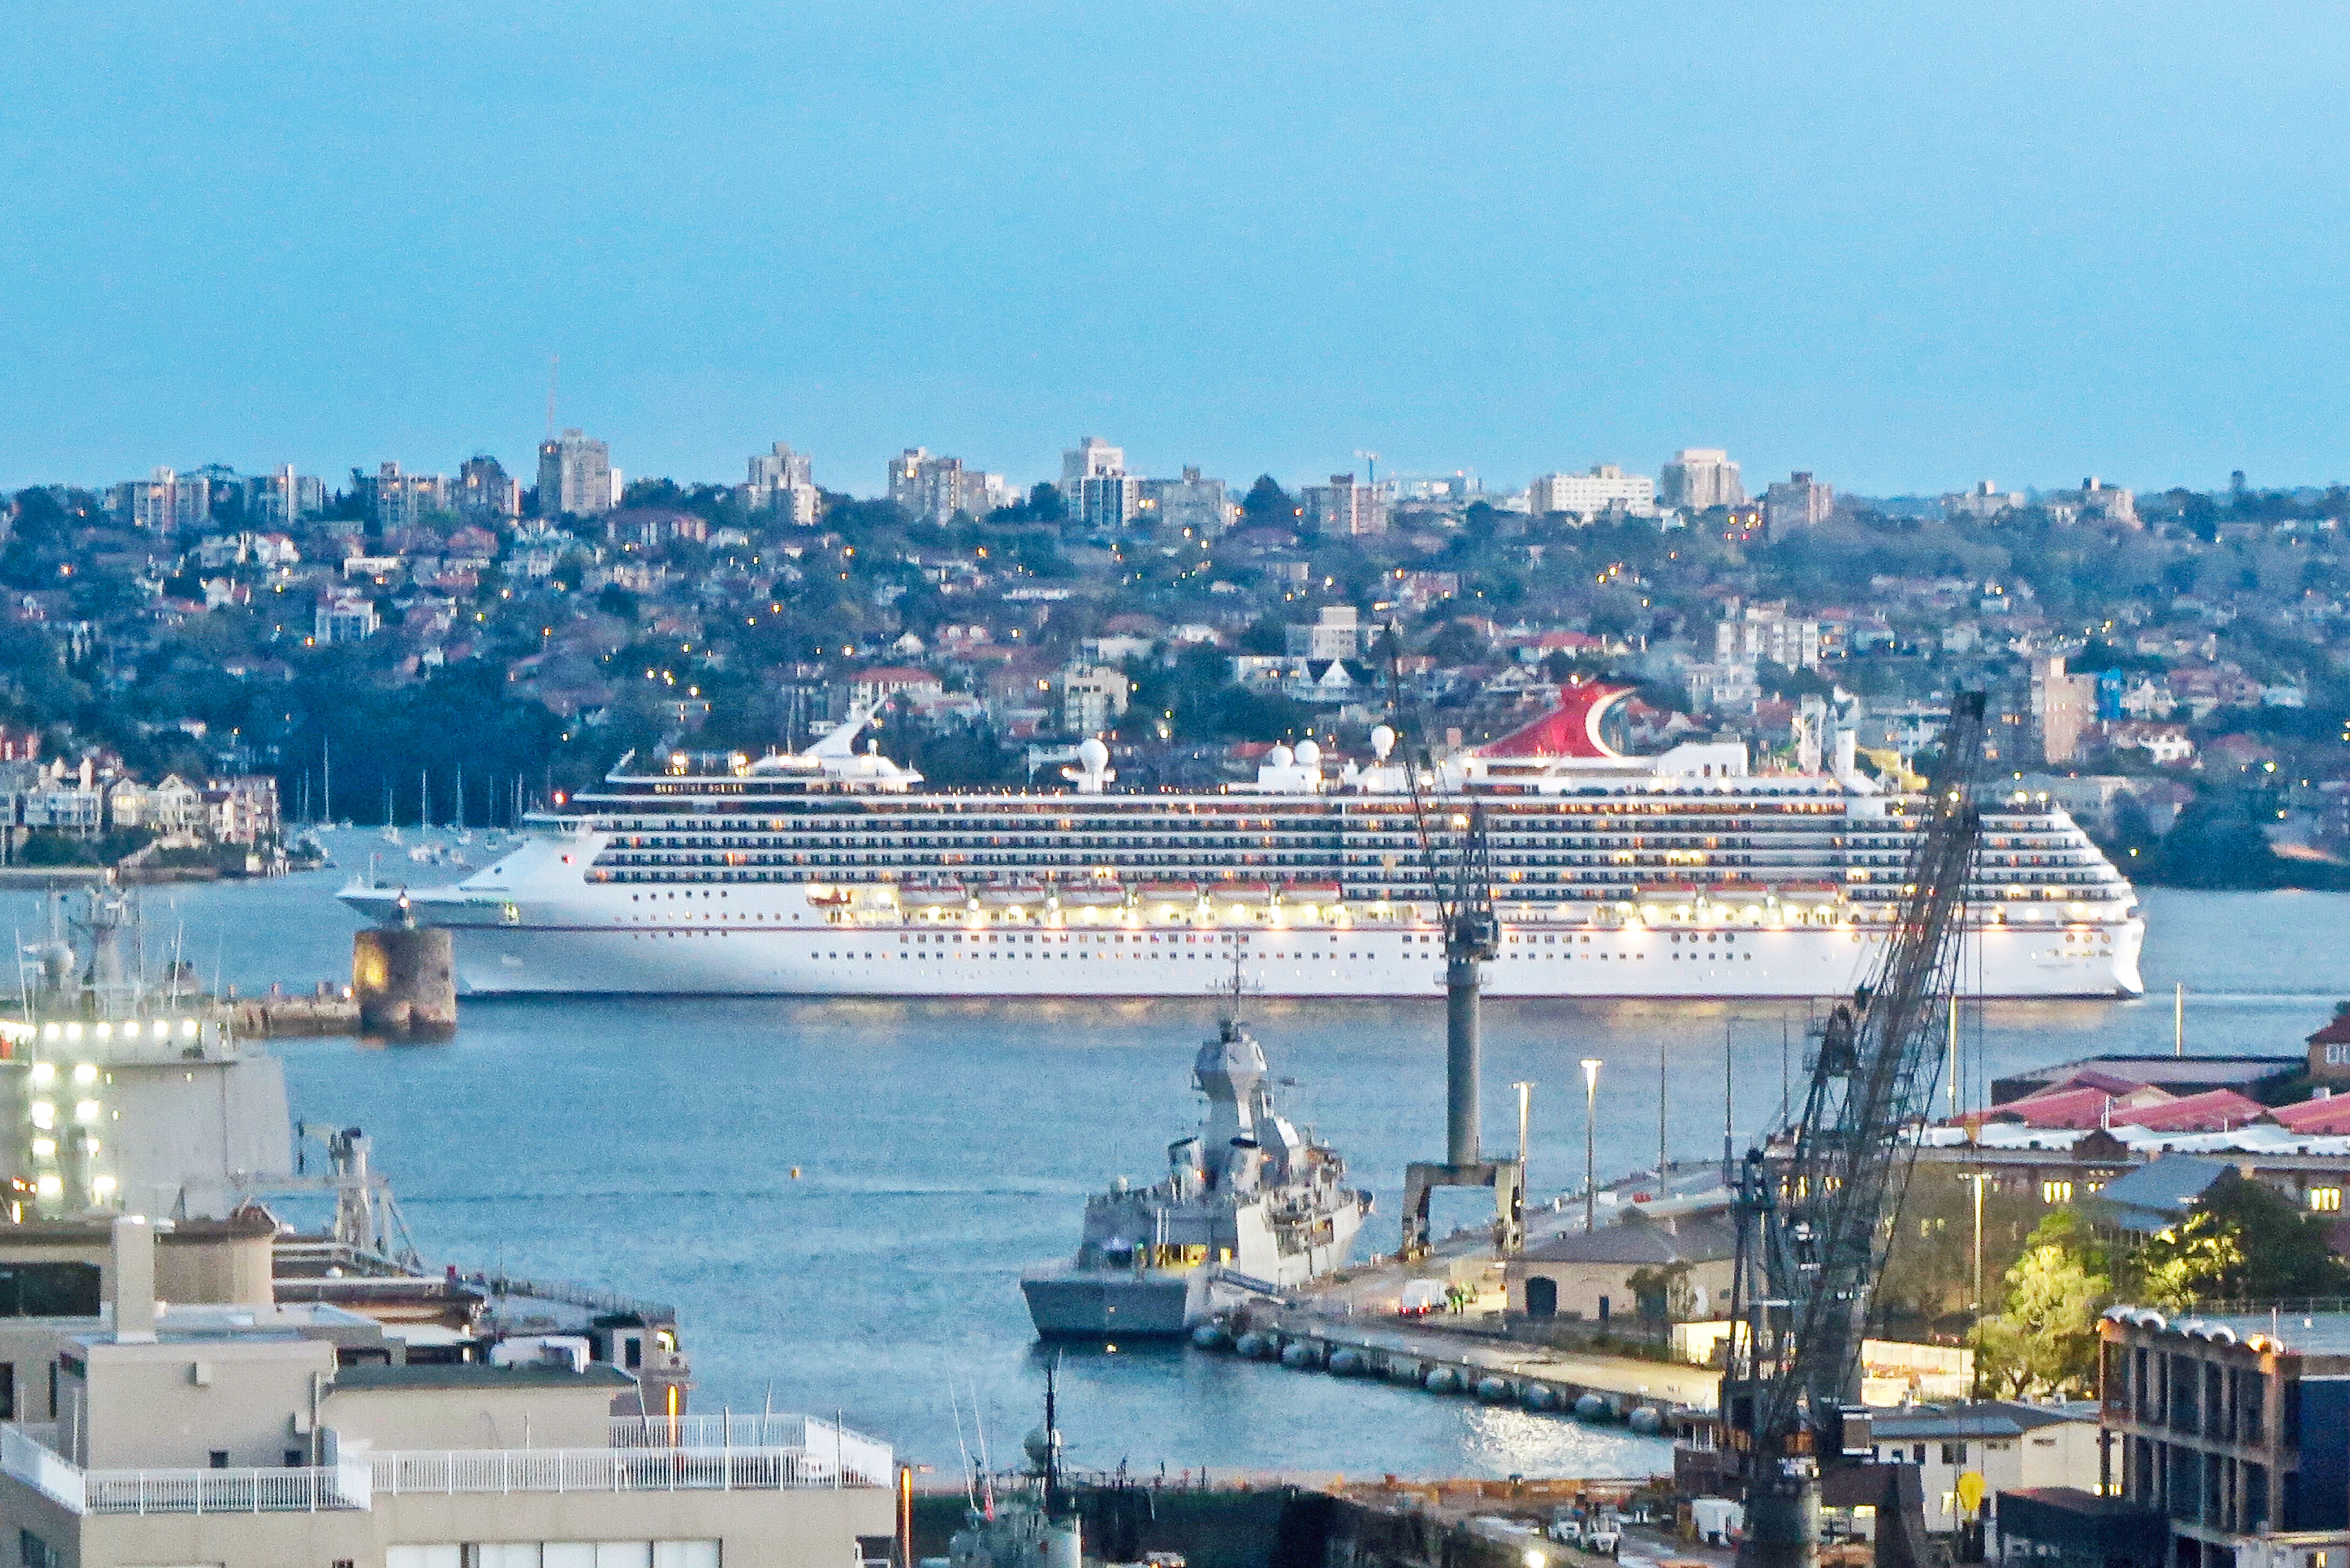 Carnival Spirit sails into Sydney harbour